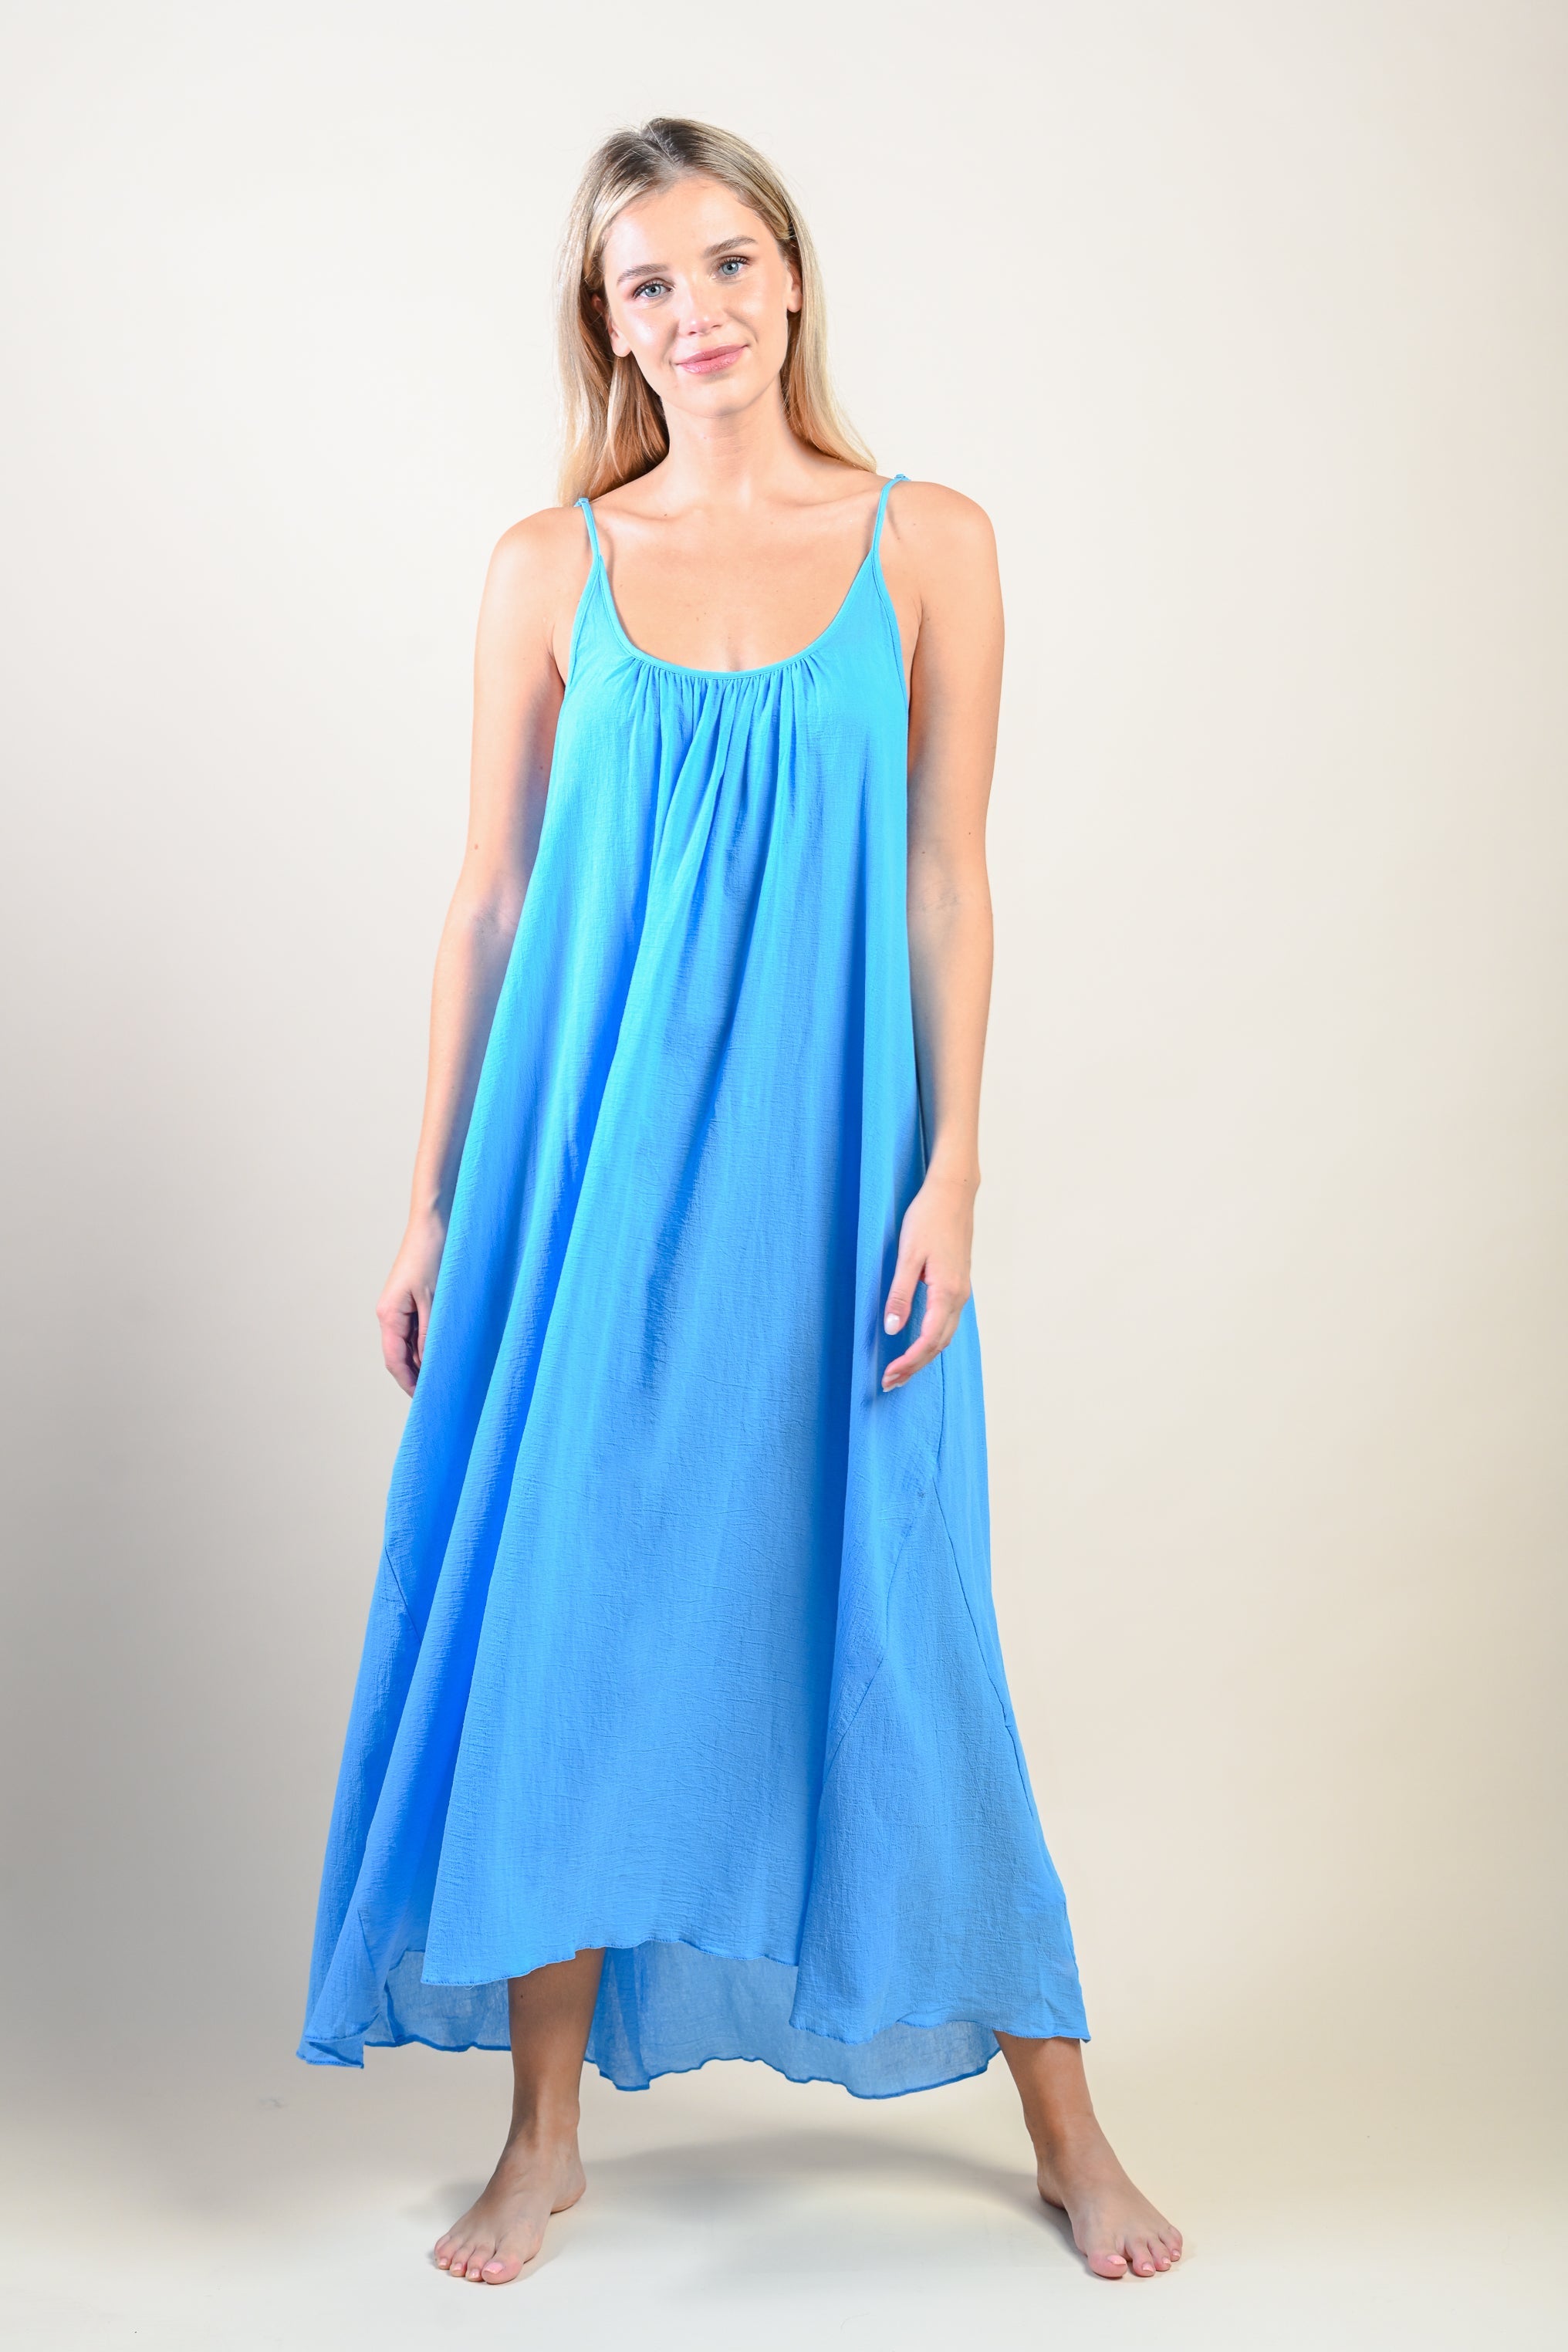 Malfi Dress by Sitano